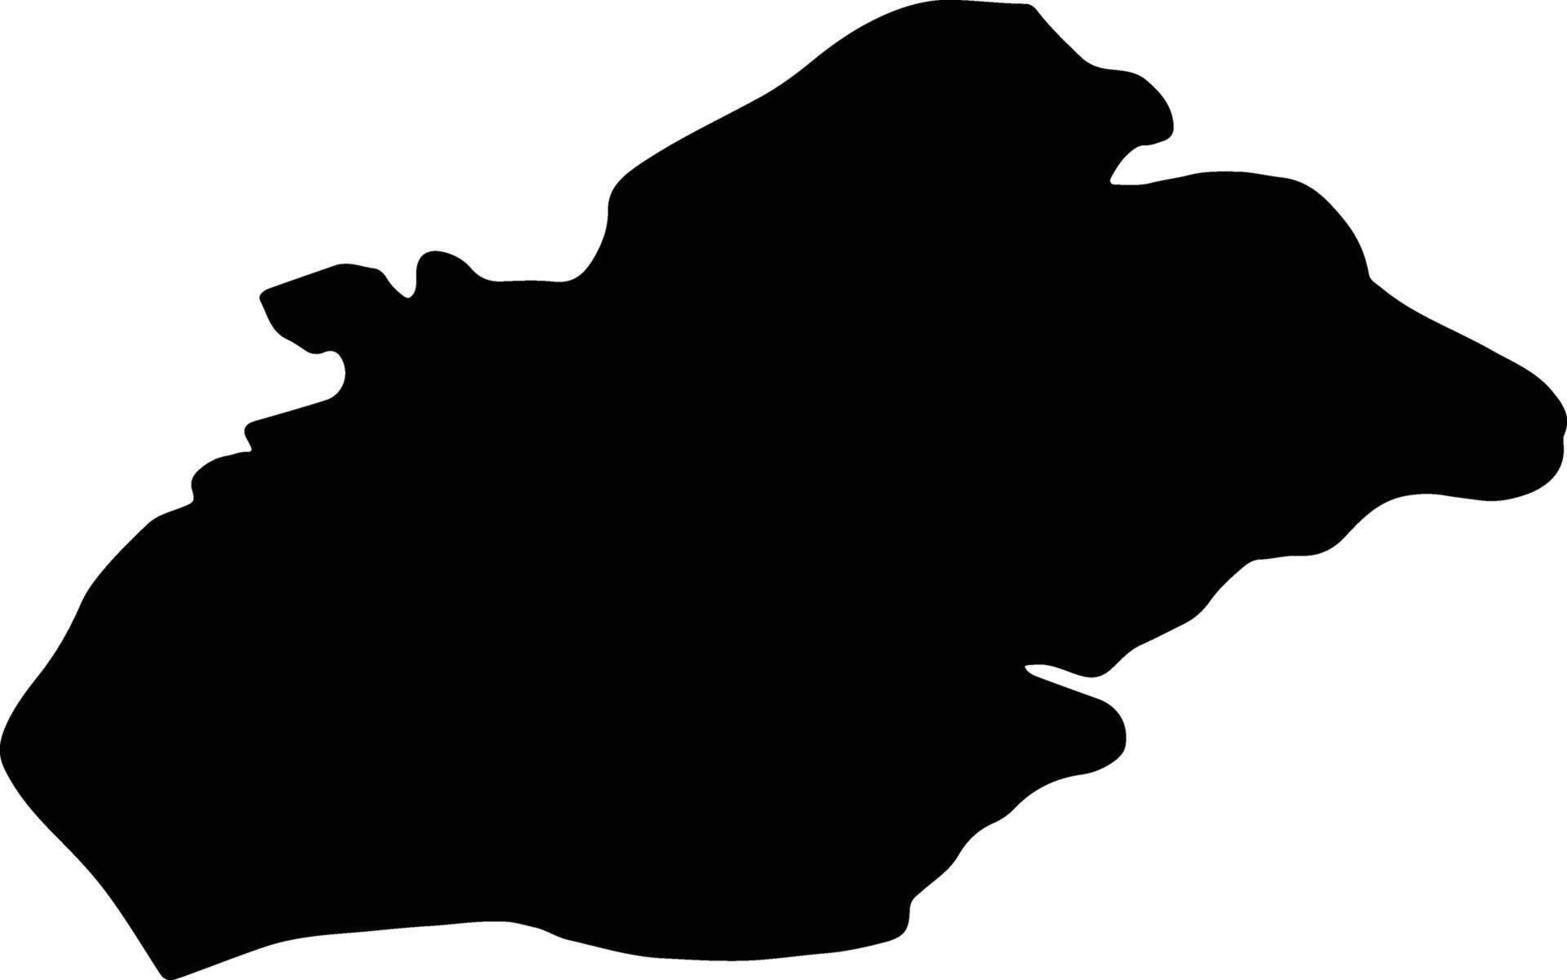 Longford Ireland silhouette map vector